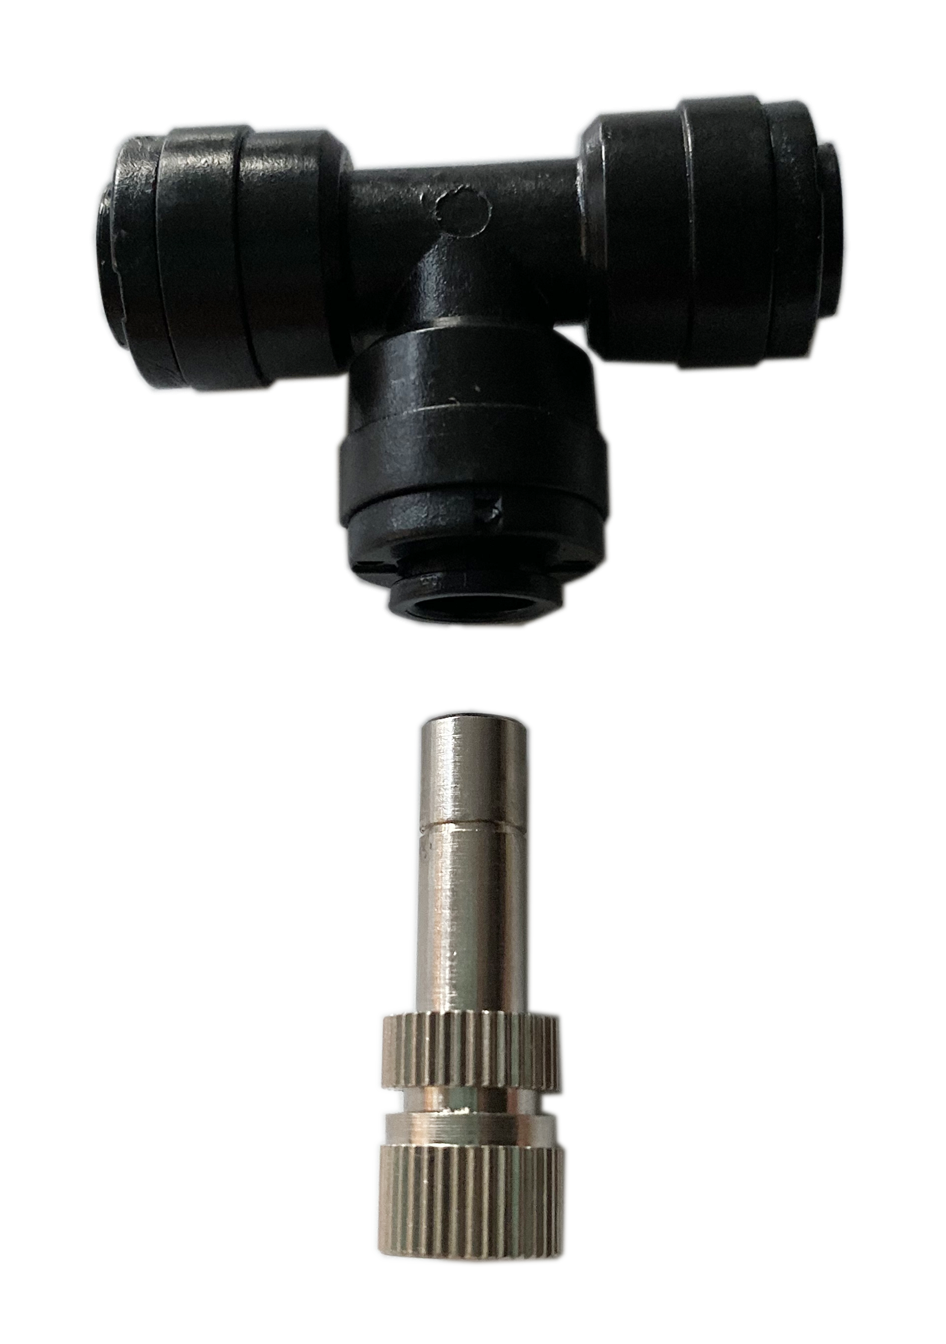 Electric sprayer 12V water mist pump kits 8M-18M with timer 6mm slip lock nozzles mister garden sprinkler irrigation system S352